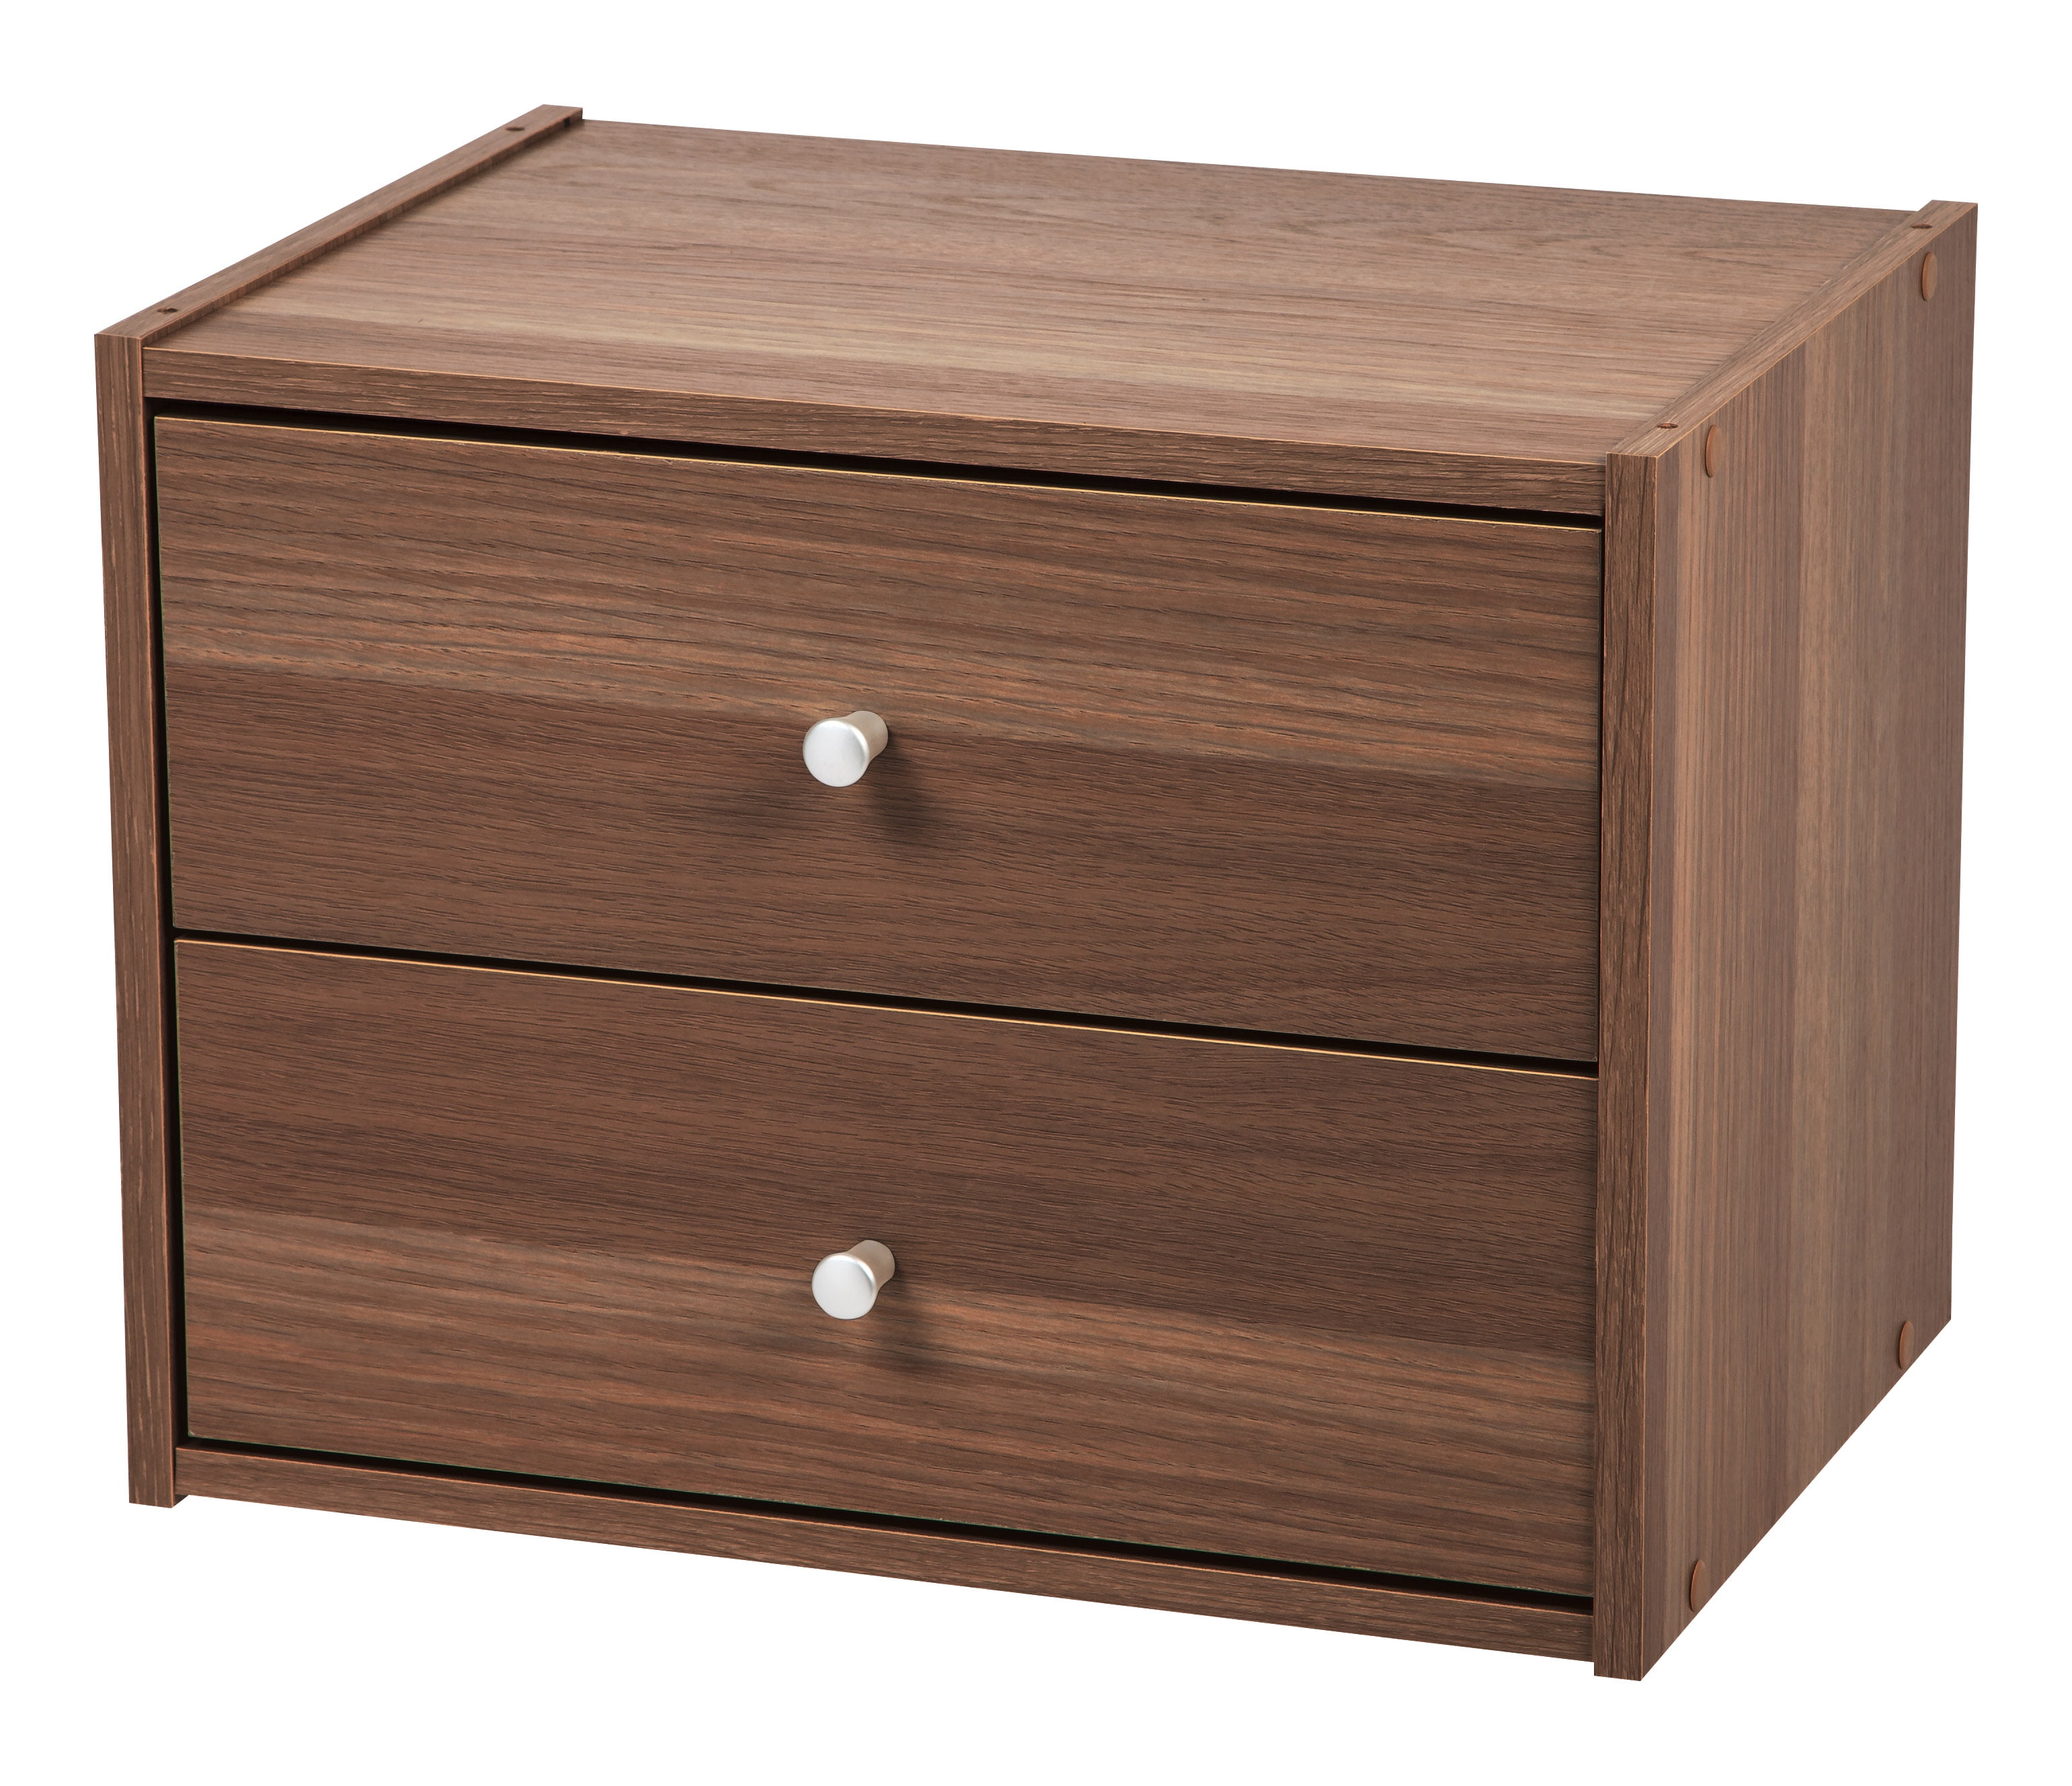 IRIS TACHI Modular Wood Stacking Storage Box with Shelf, Dark Brown